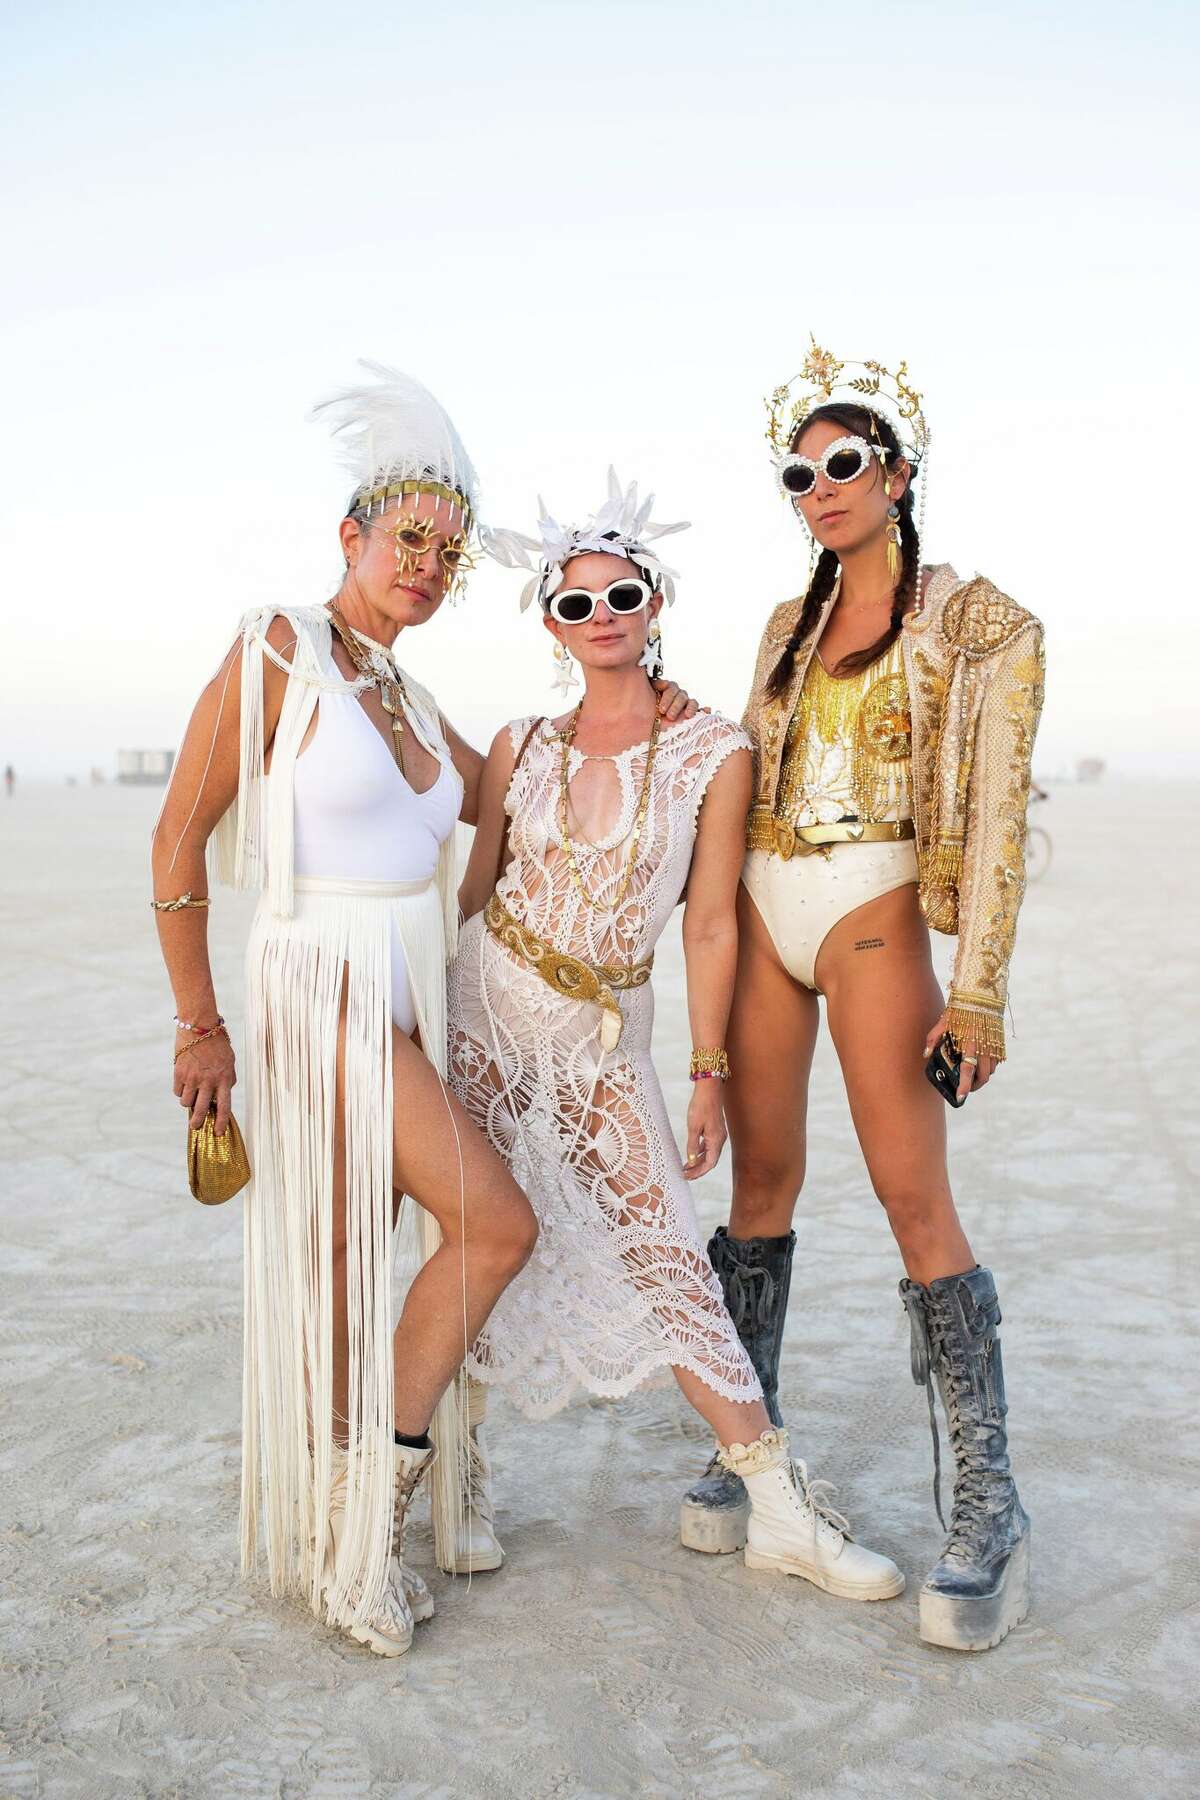 @bethielle, @3casascareyes and @ravenkauffman at Burning Man 2022 at the Black Rock Desert in Gerlac, Nevada.